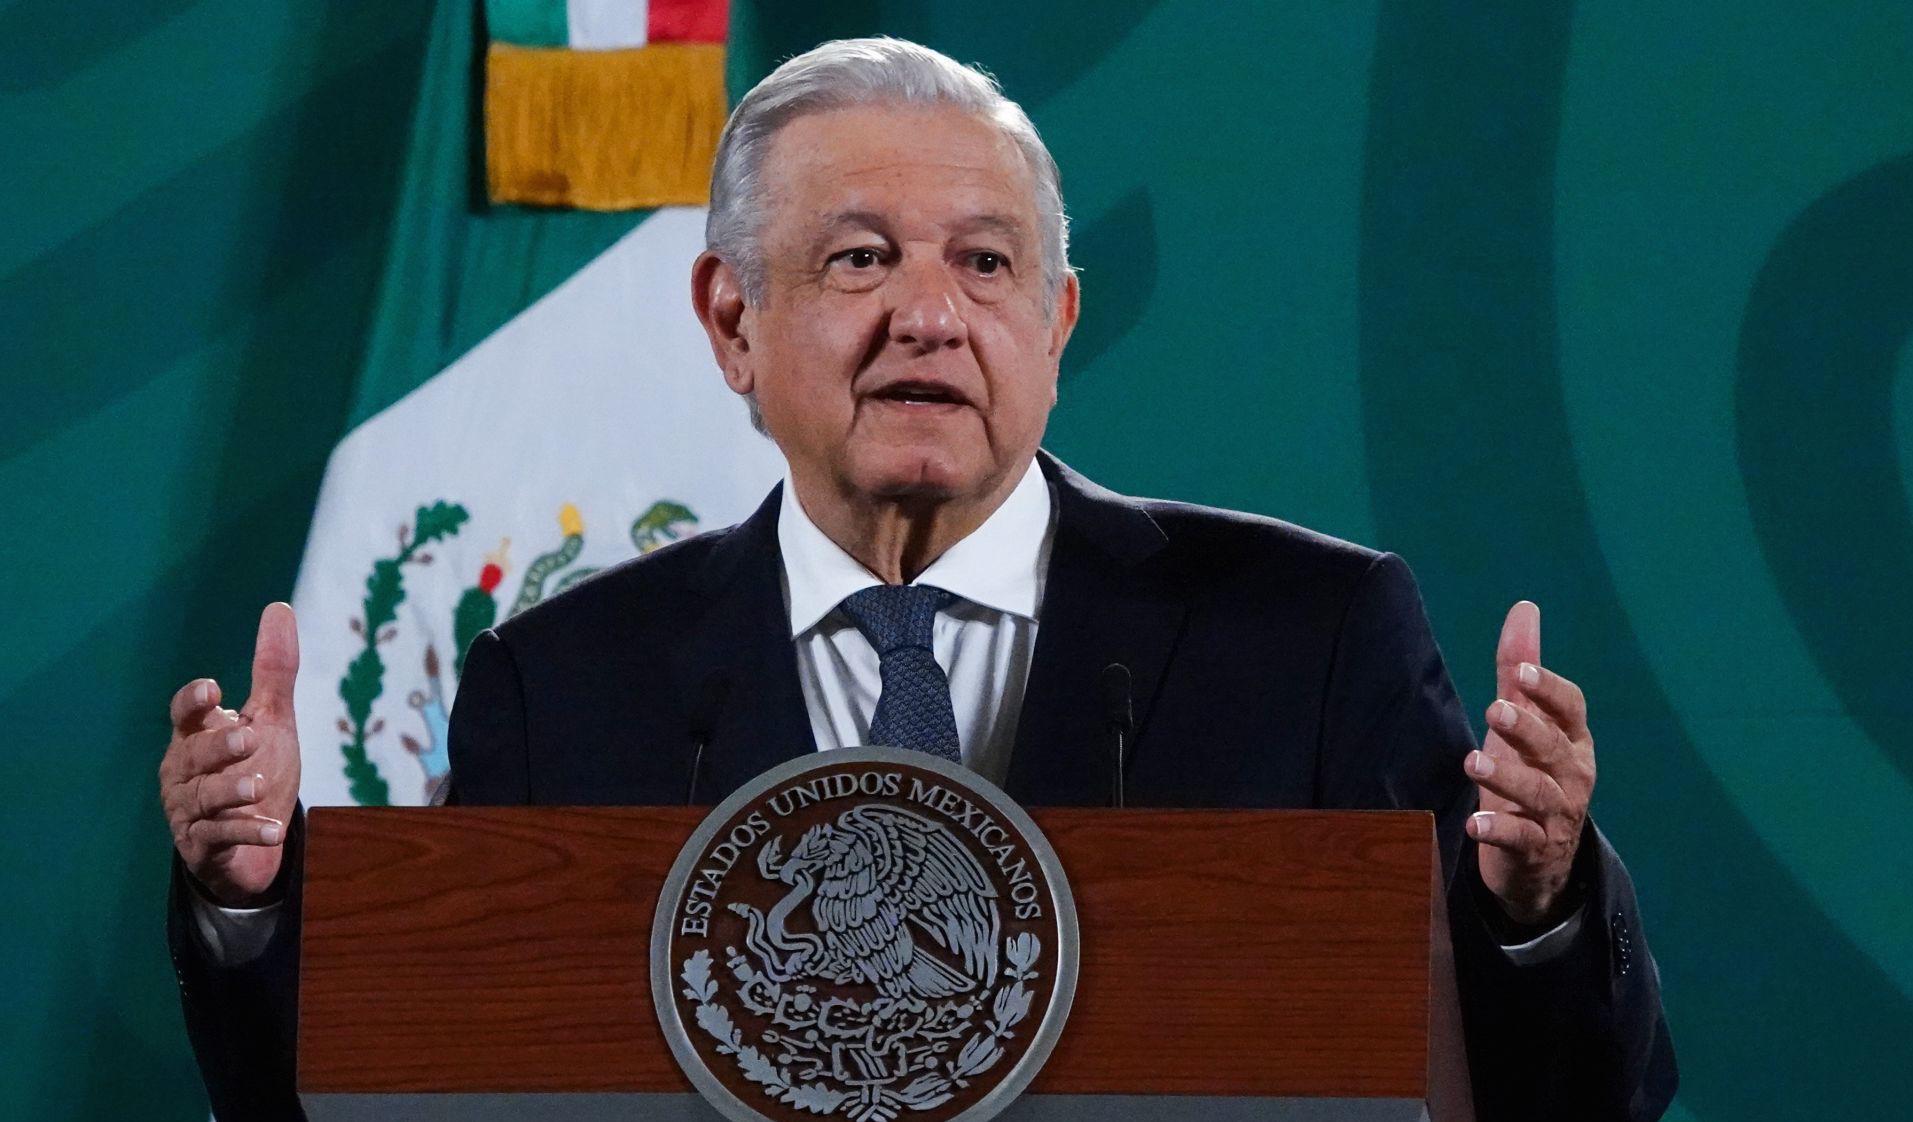 ‘¿Ustedes creen que voy a confiar en el Poder Judicial? Está podrido’, dice López Obrador